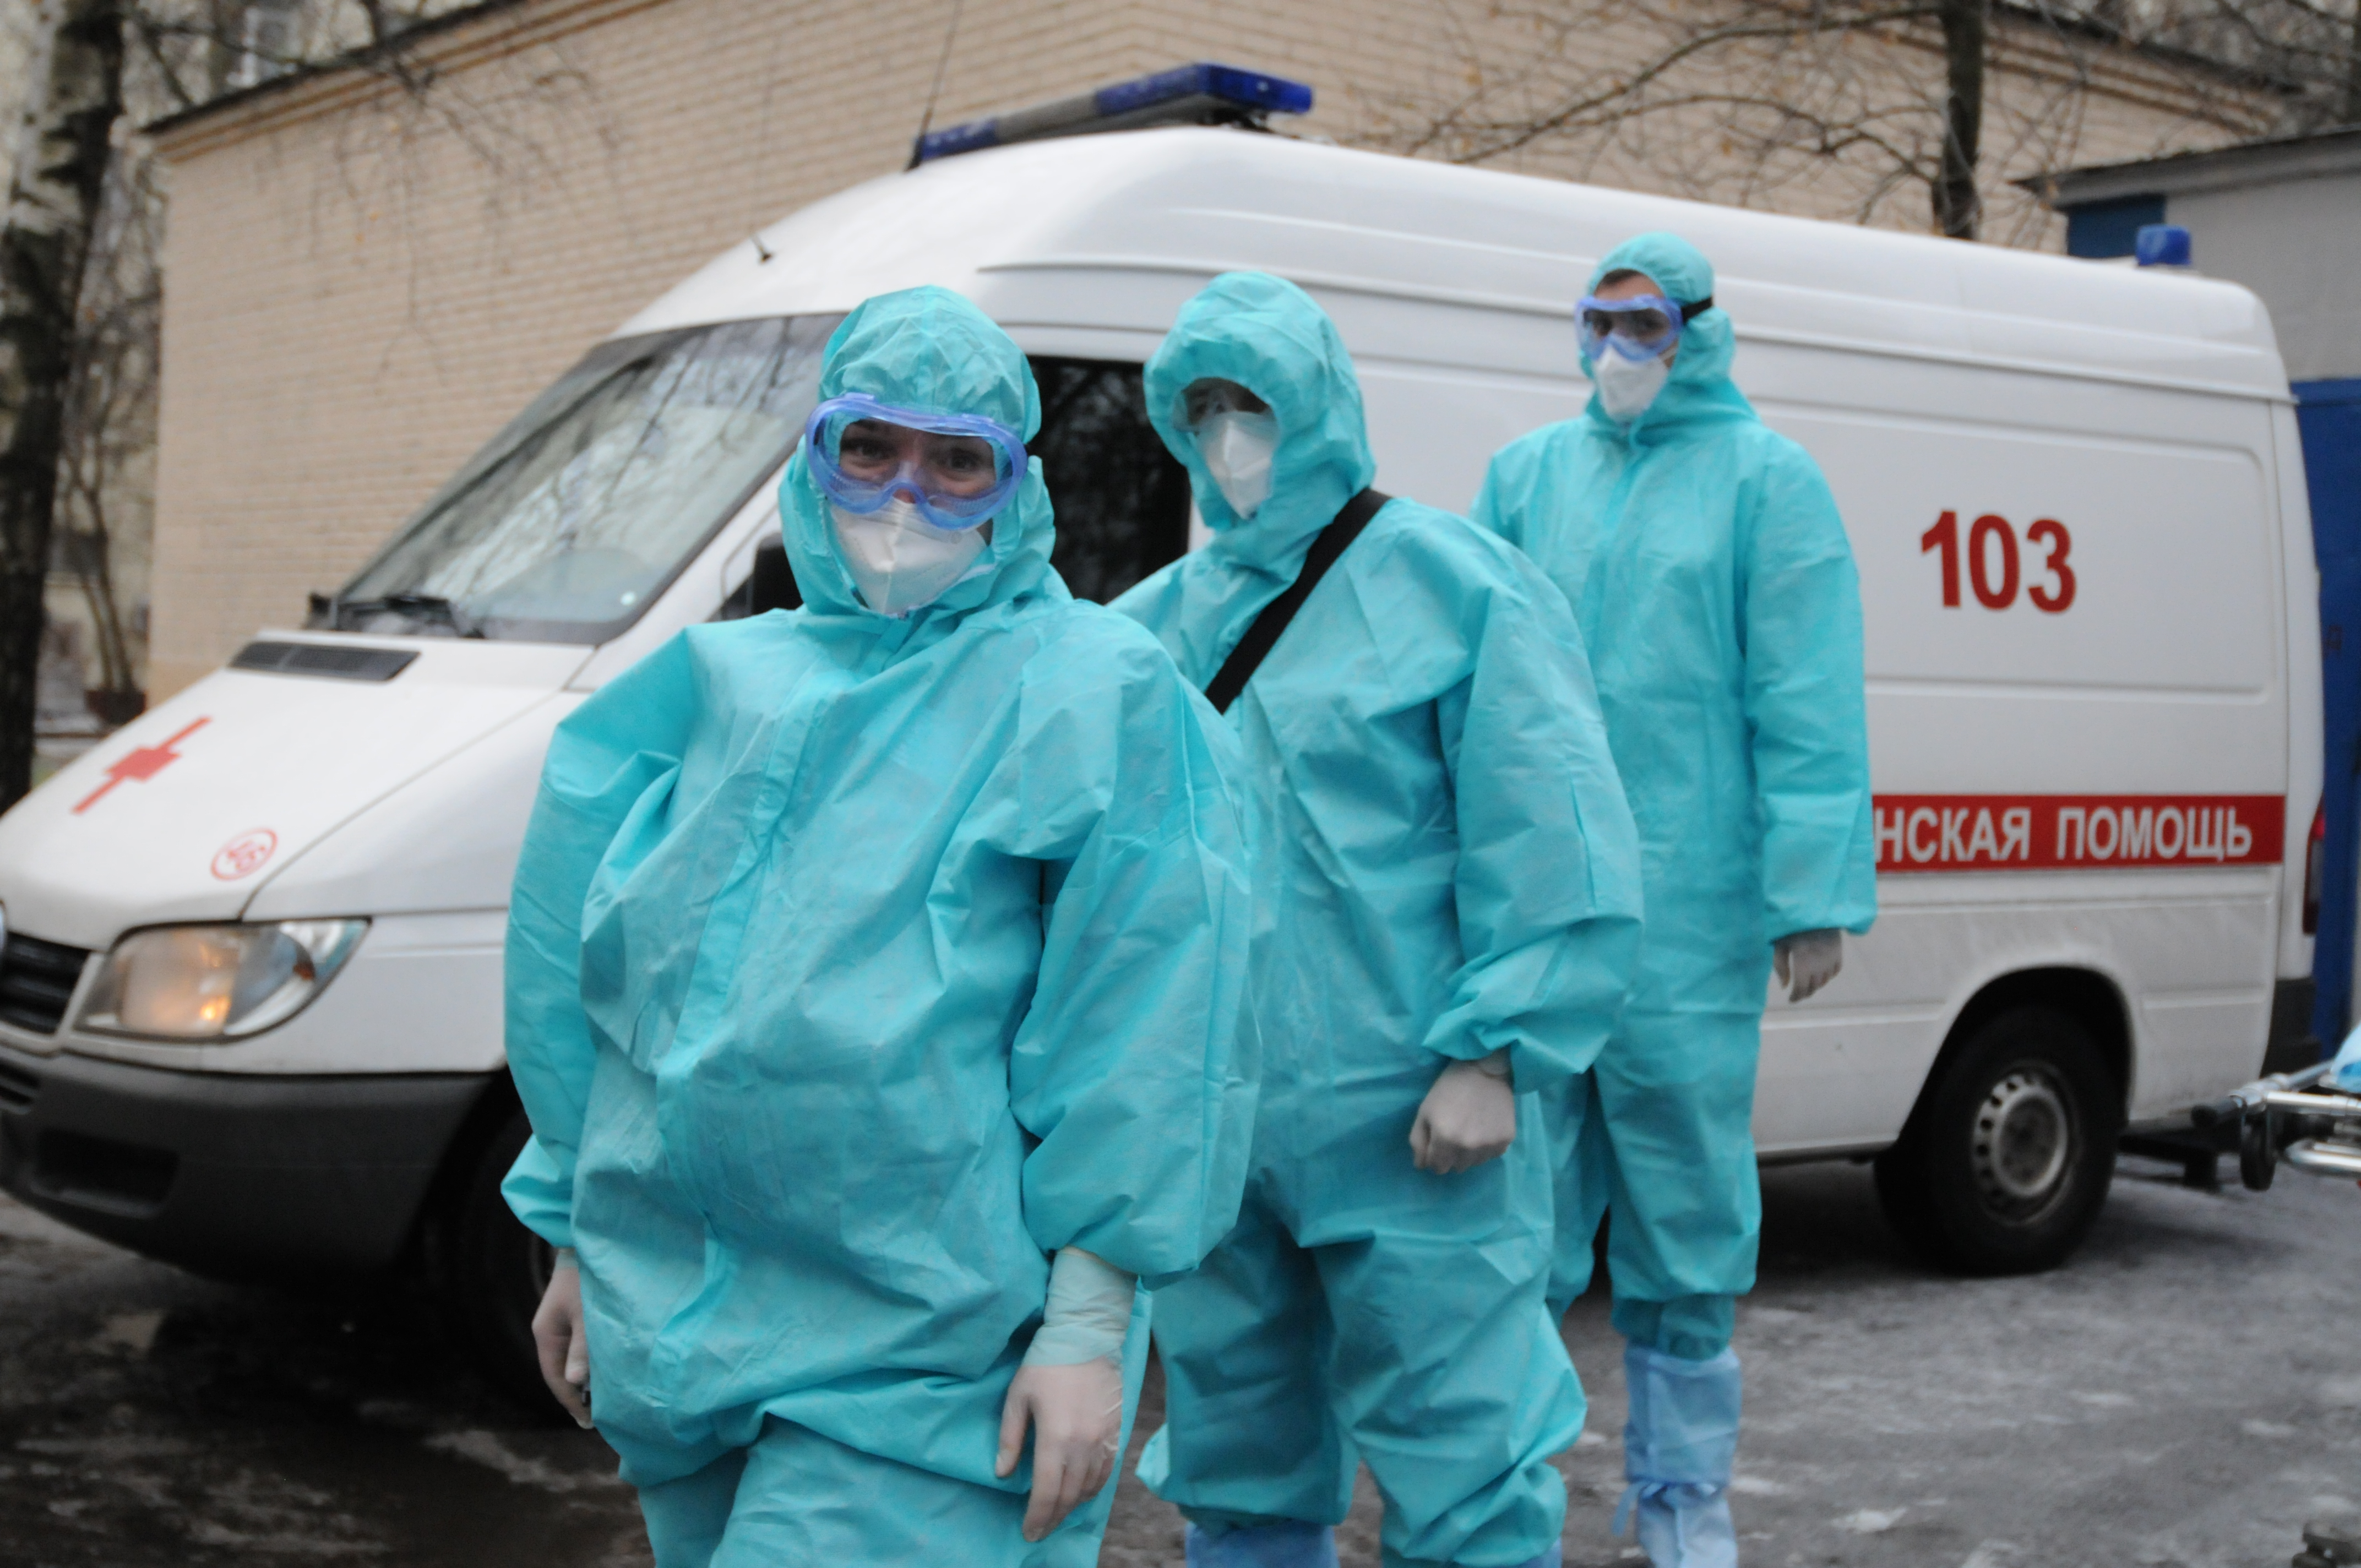 Московские врачи нашли более 7,7 тысячи носителей COVID-19 за сутки